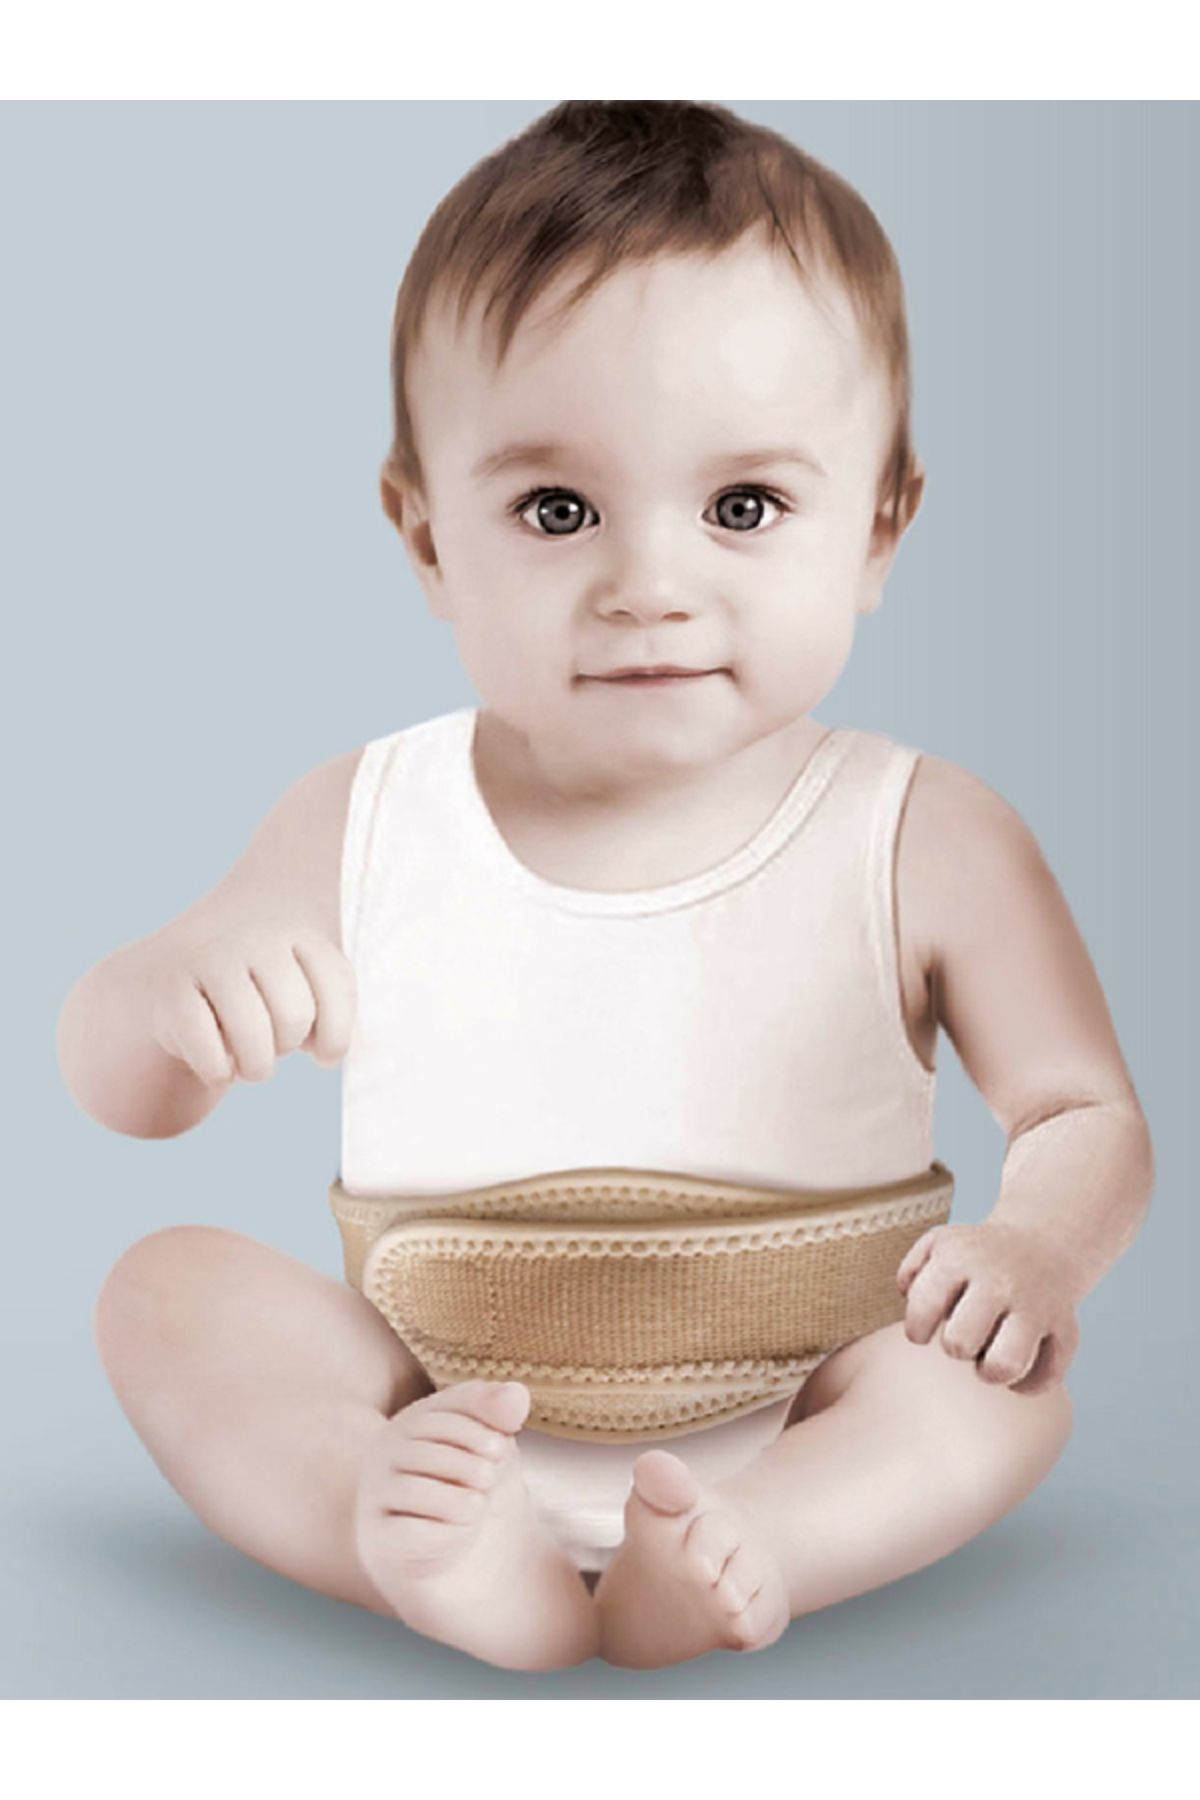 MORSA CYBERG ® Çocuk Bebek Göbek Fıtığı Korsesi